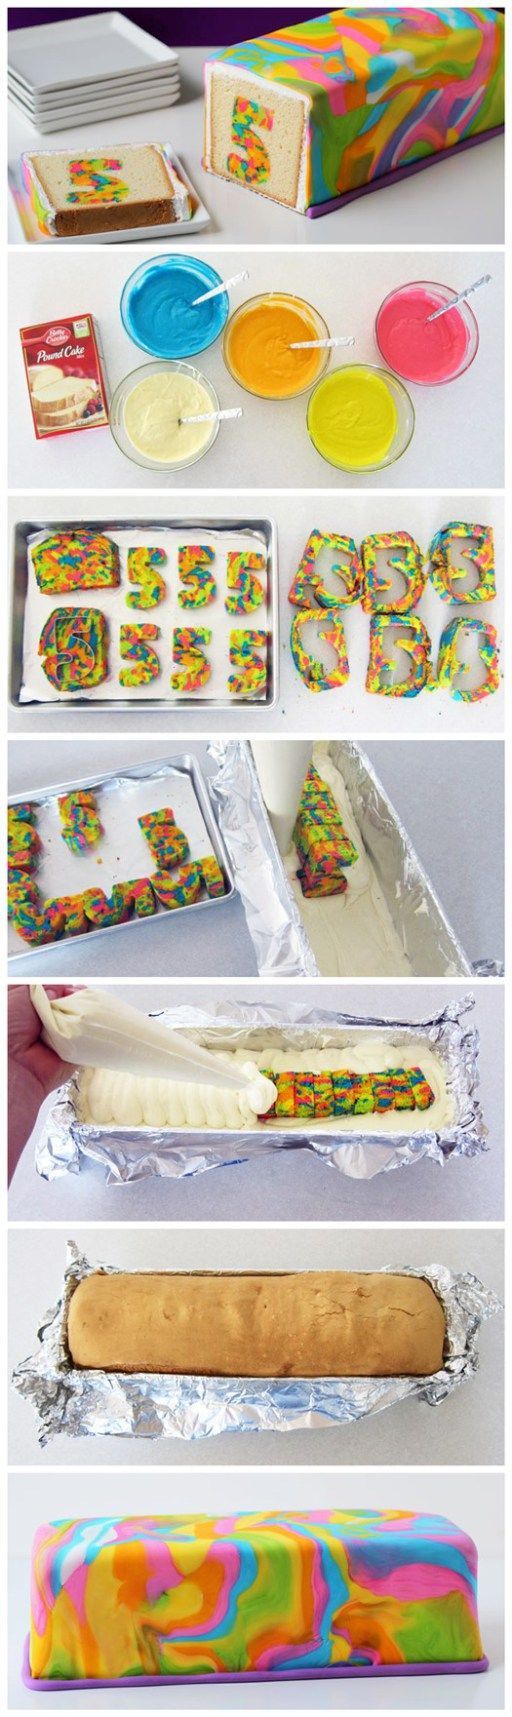 DIY Rainbow Tie Dye Surprise Cake. Wow!